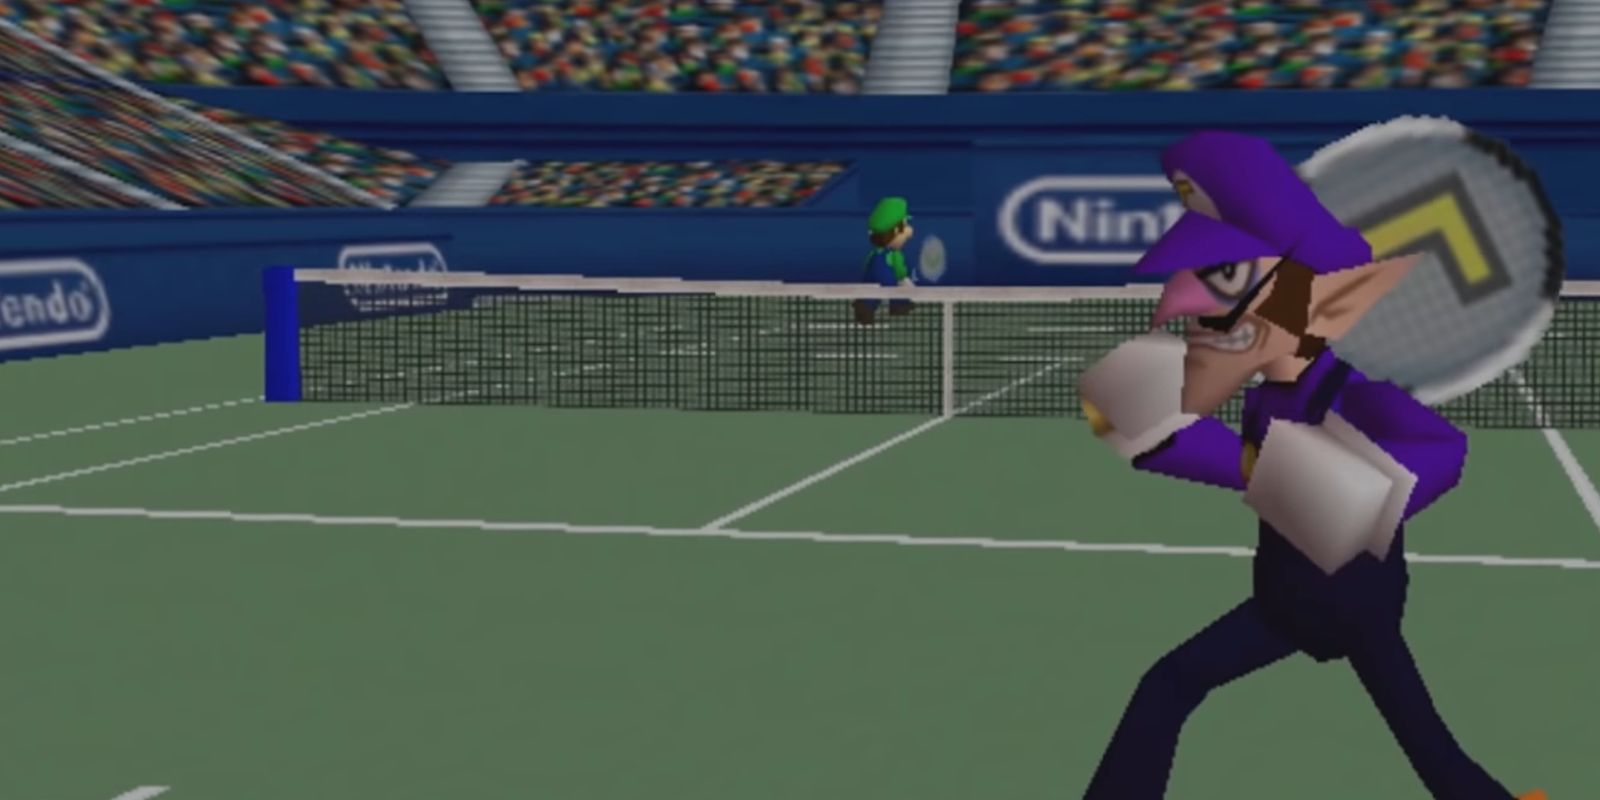 Waluigi and Luigi entering the court in Mario Tennis